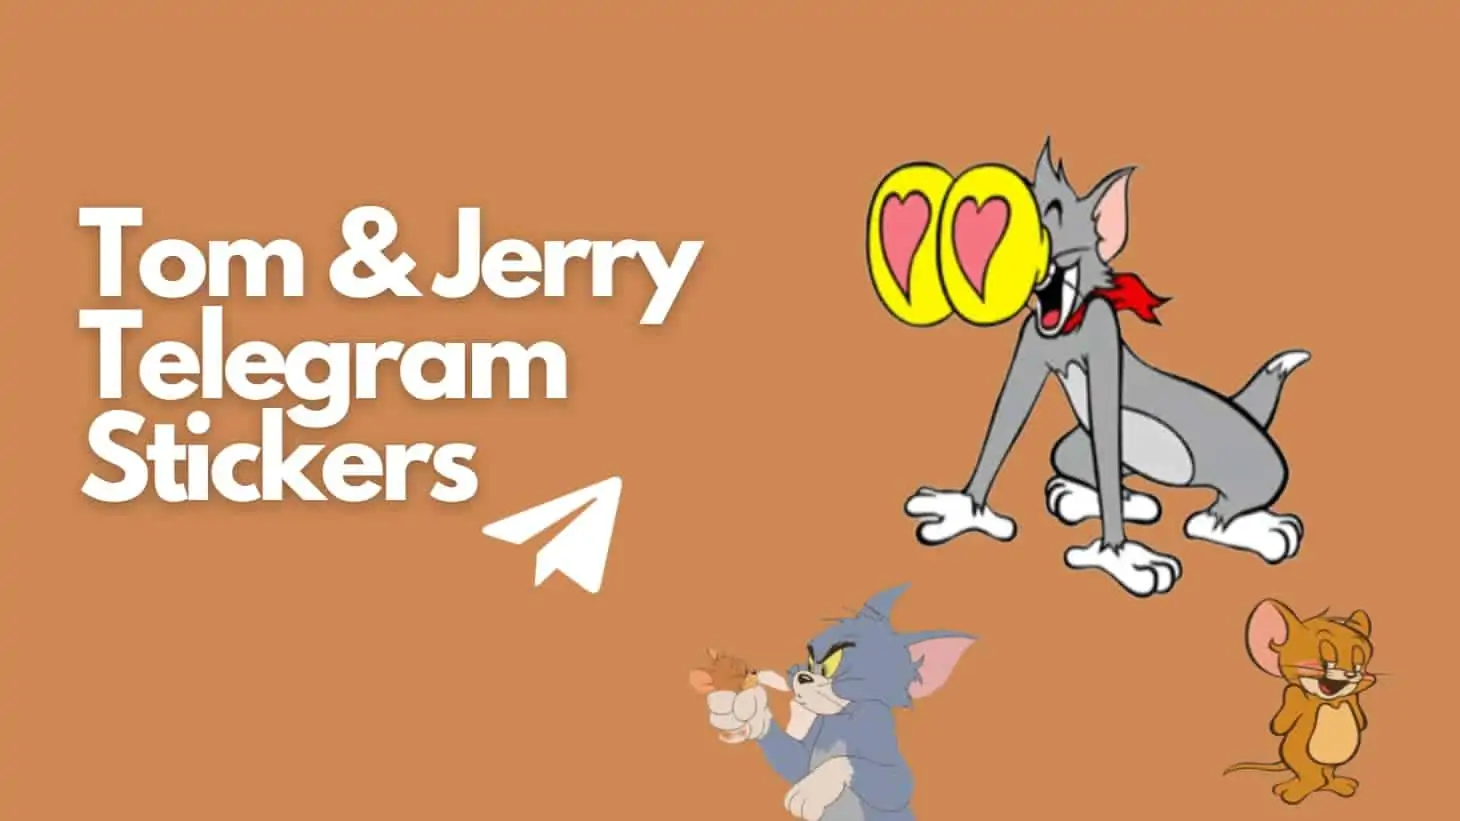 Tom and Jerry Telegram Stickers